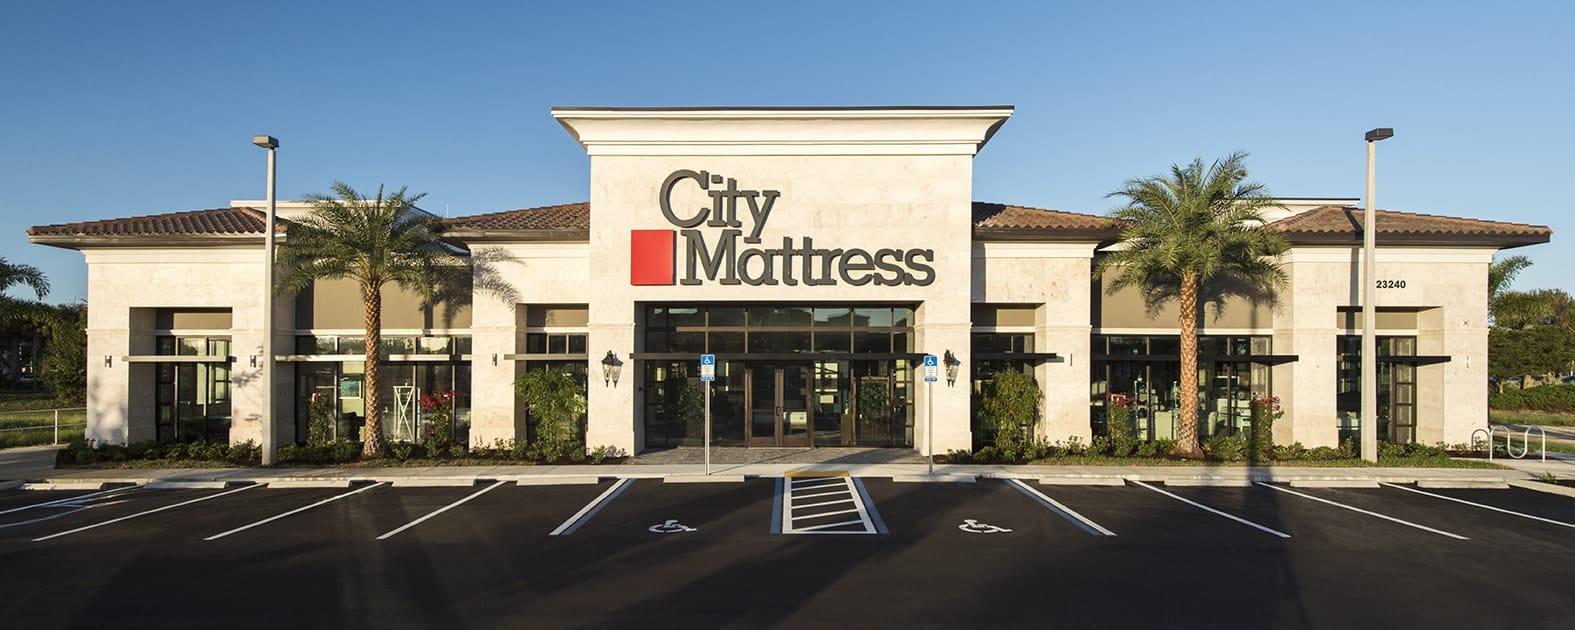 City Mattress - Estero, FL